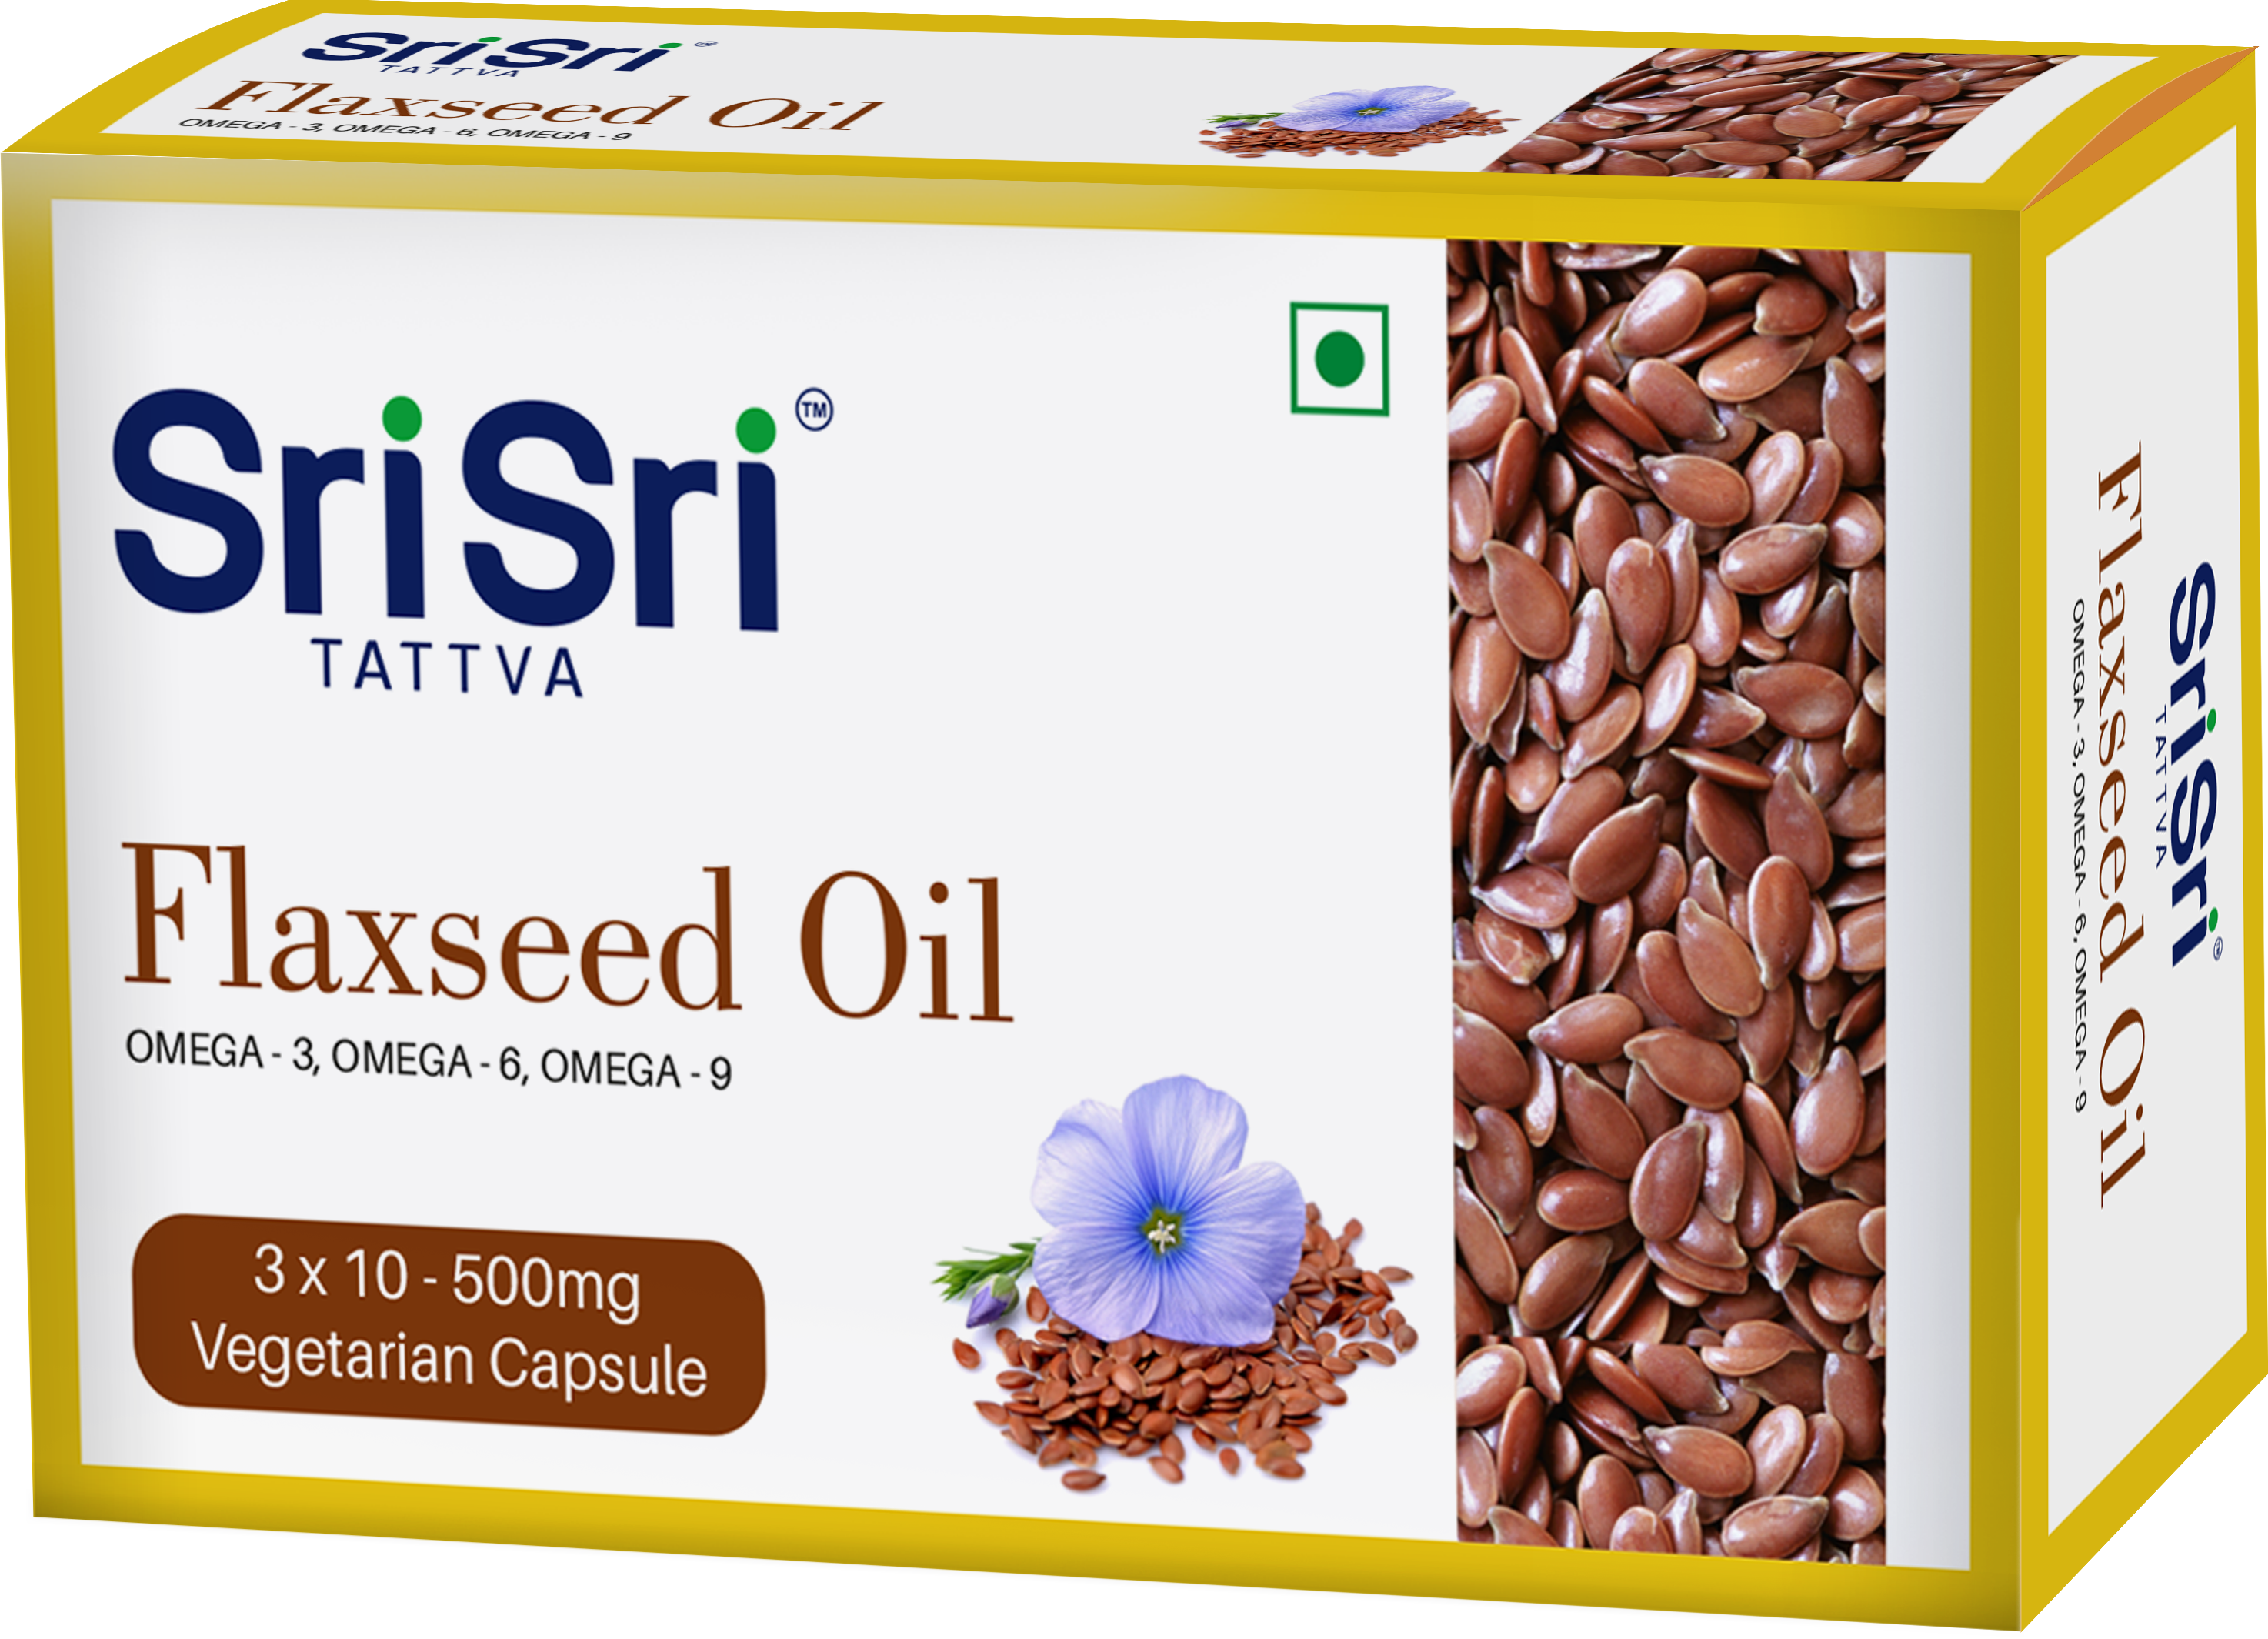 Buy Sri Sri Tattva Flaxseed Oil Veg Capsule at Best Price Online